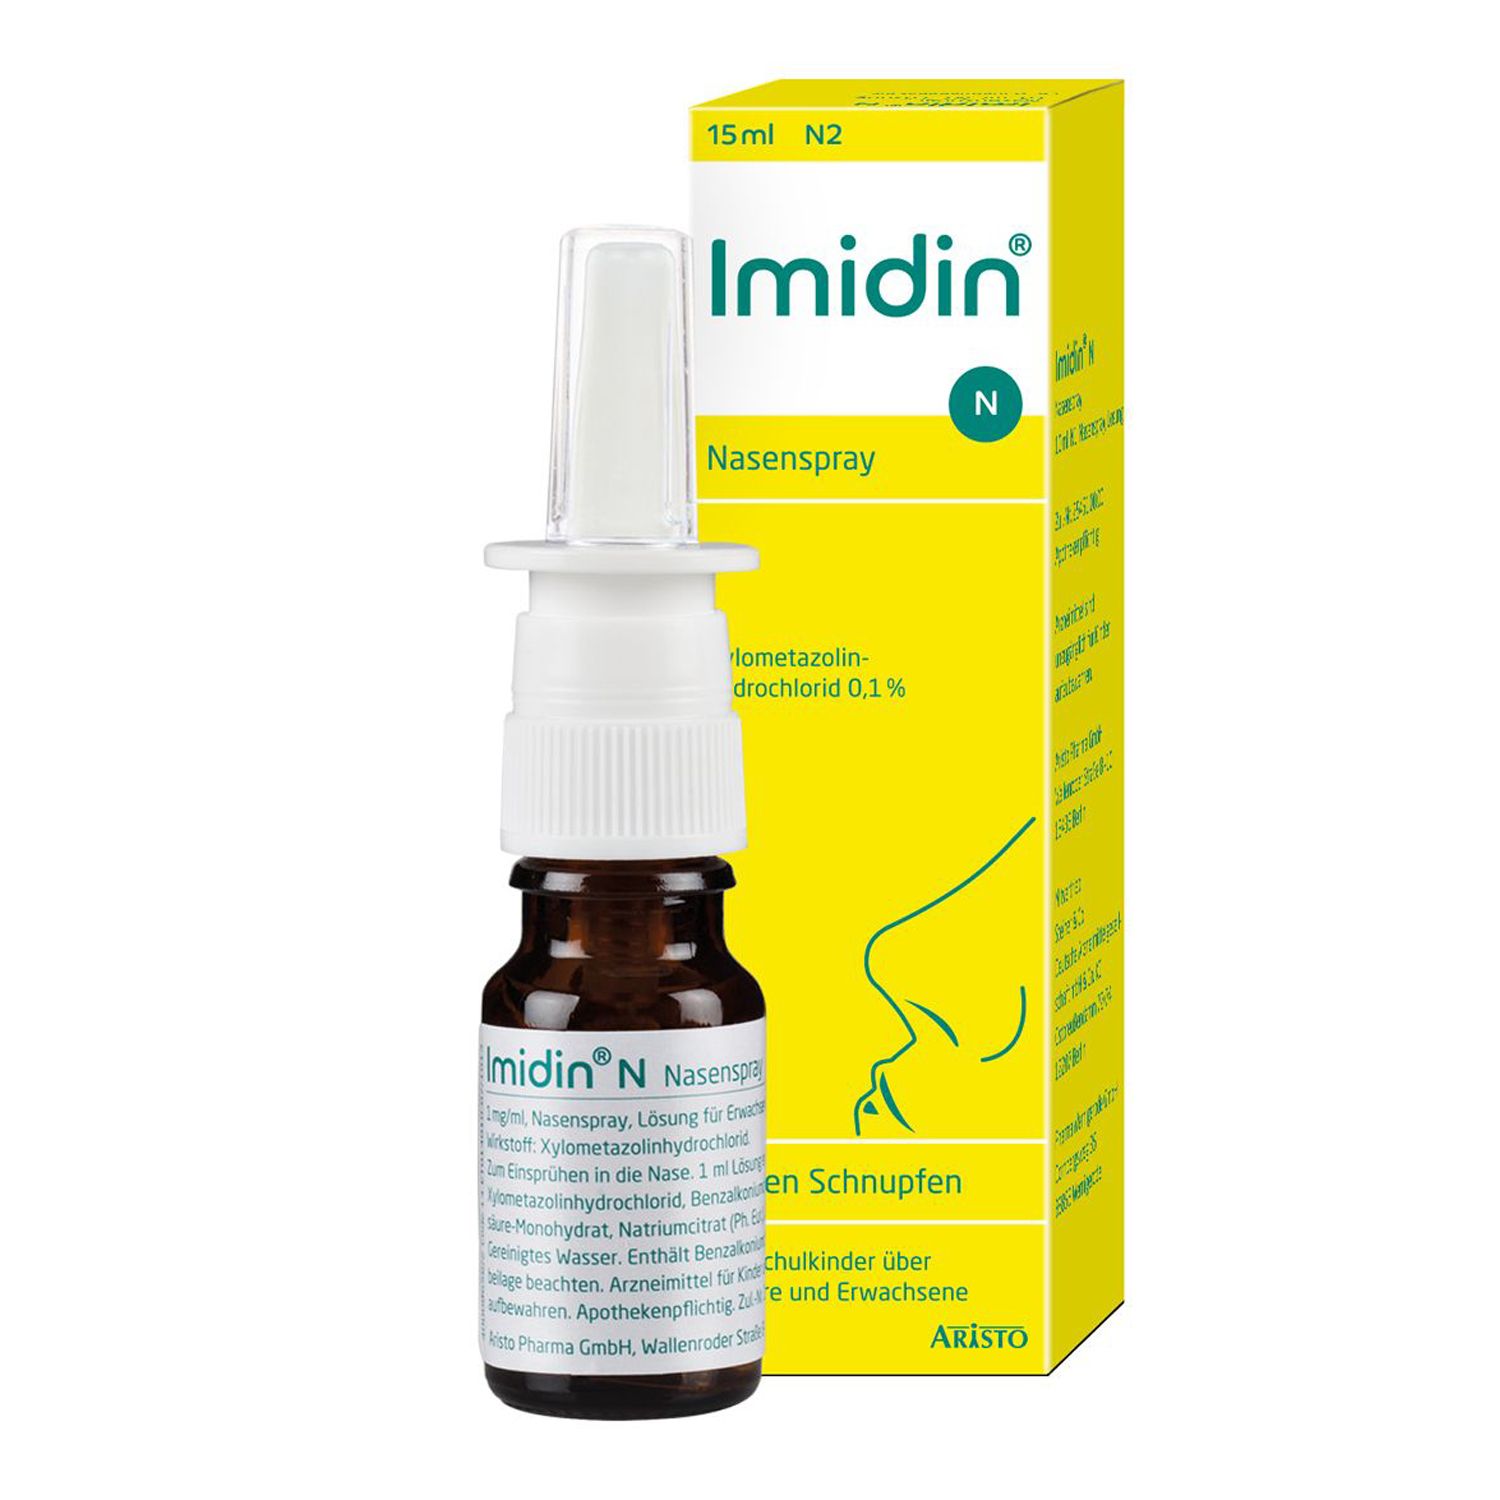 Imidin® N Nasenspray